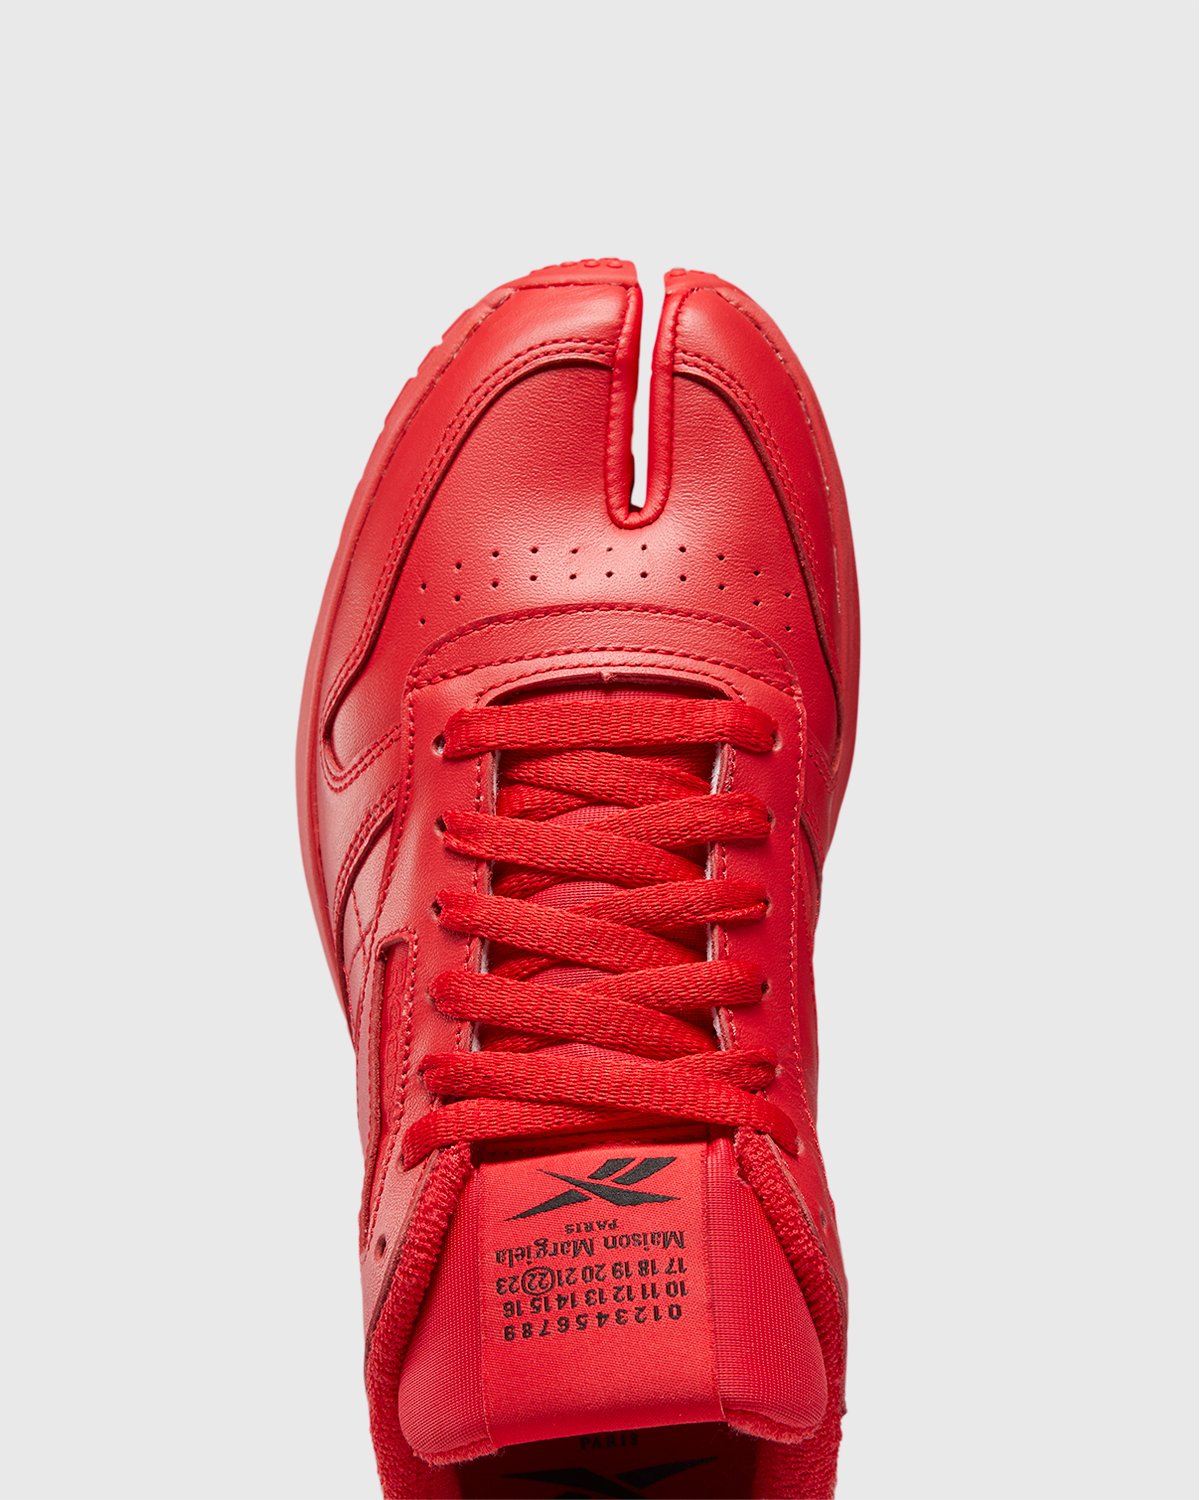 Maison Margiela x Reebok - Classic Leather Tabi Red - Footwear - Red - Image 6